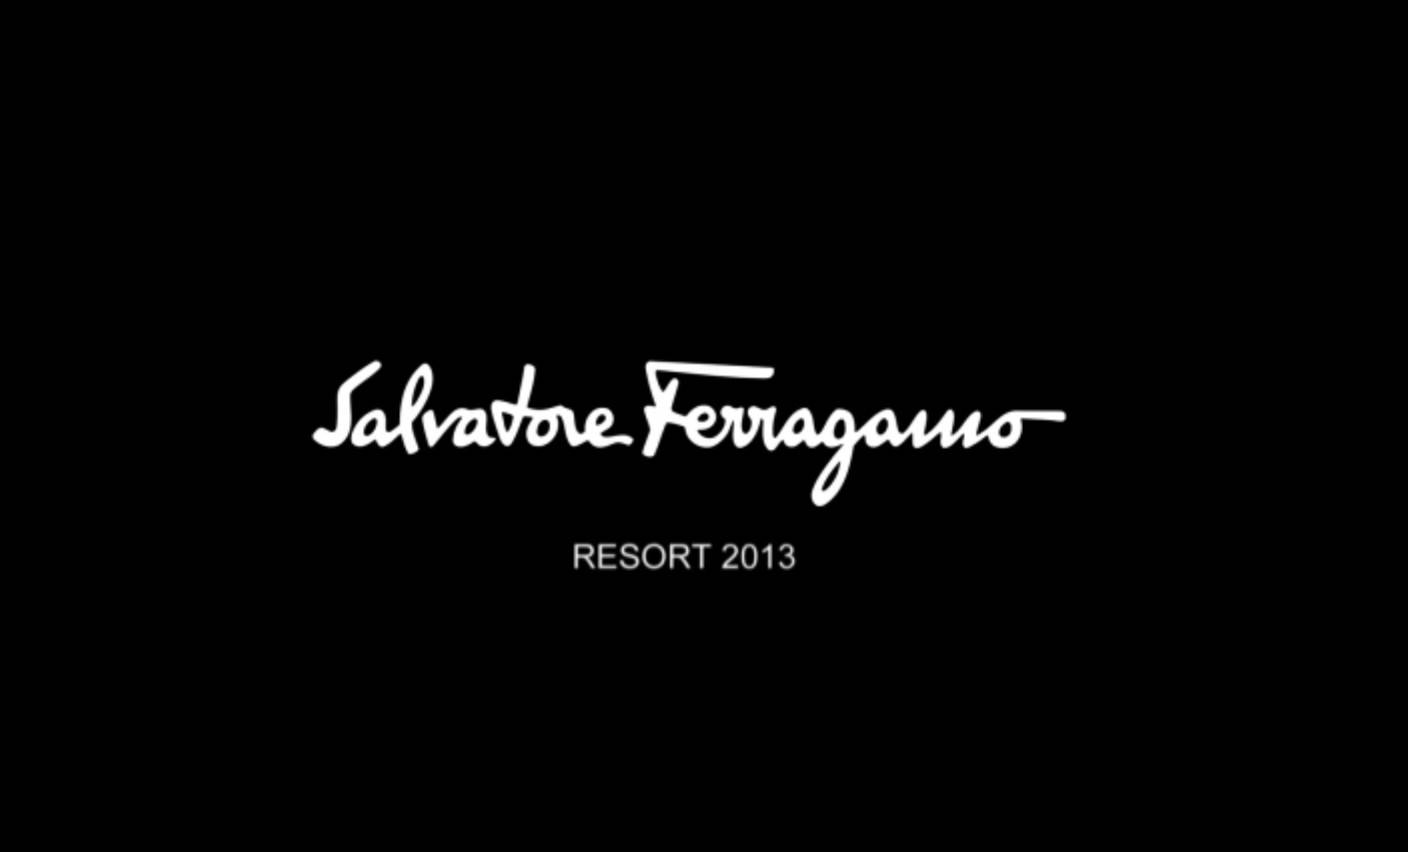 Salvatore Ferragamo Resort 2013 Wallpaper